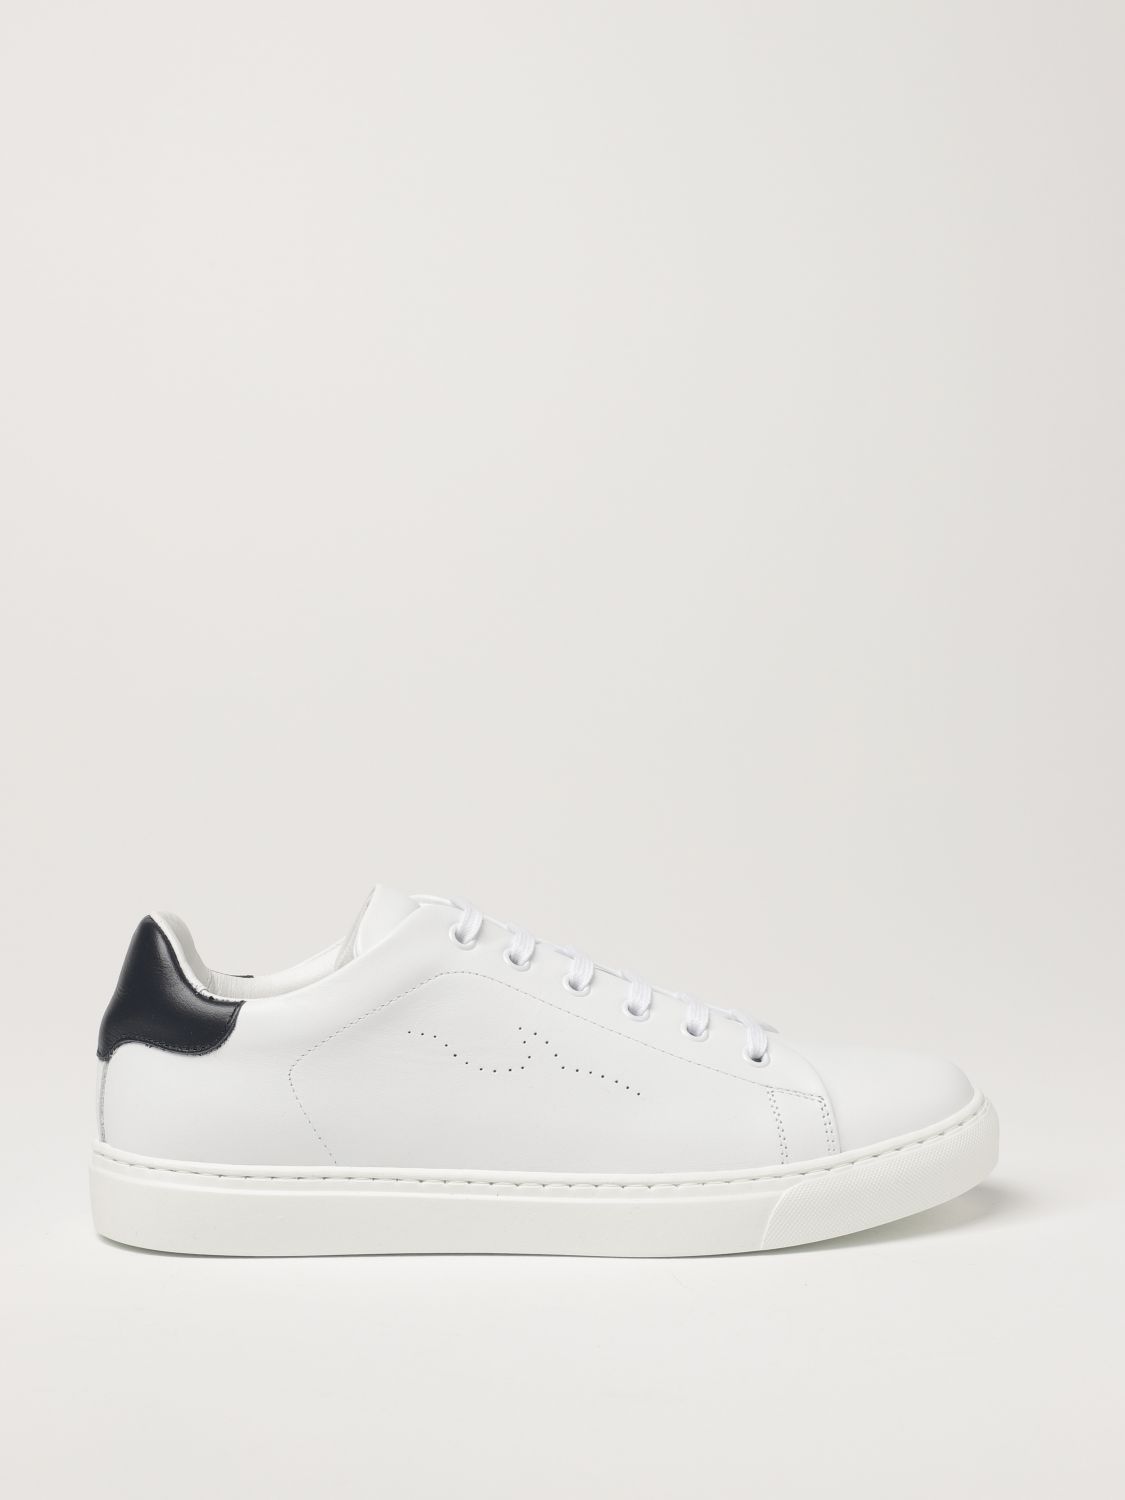 PAUL & SHARK: sneakers in leather - White | PAUL & SHARK sneakers ...